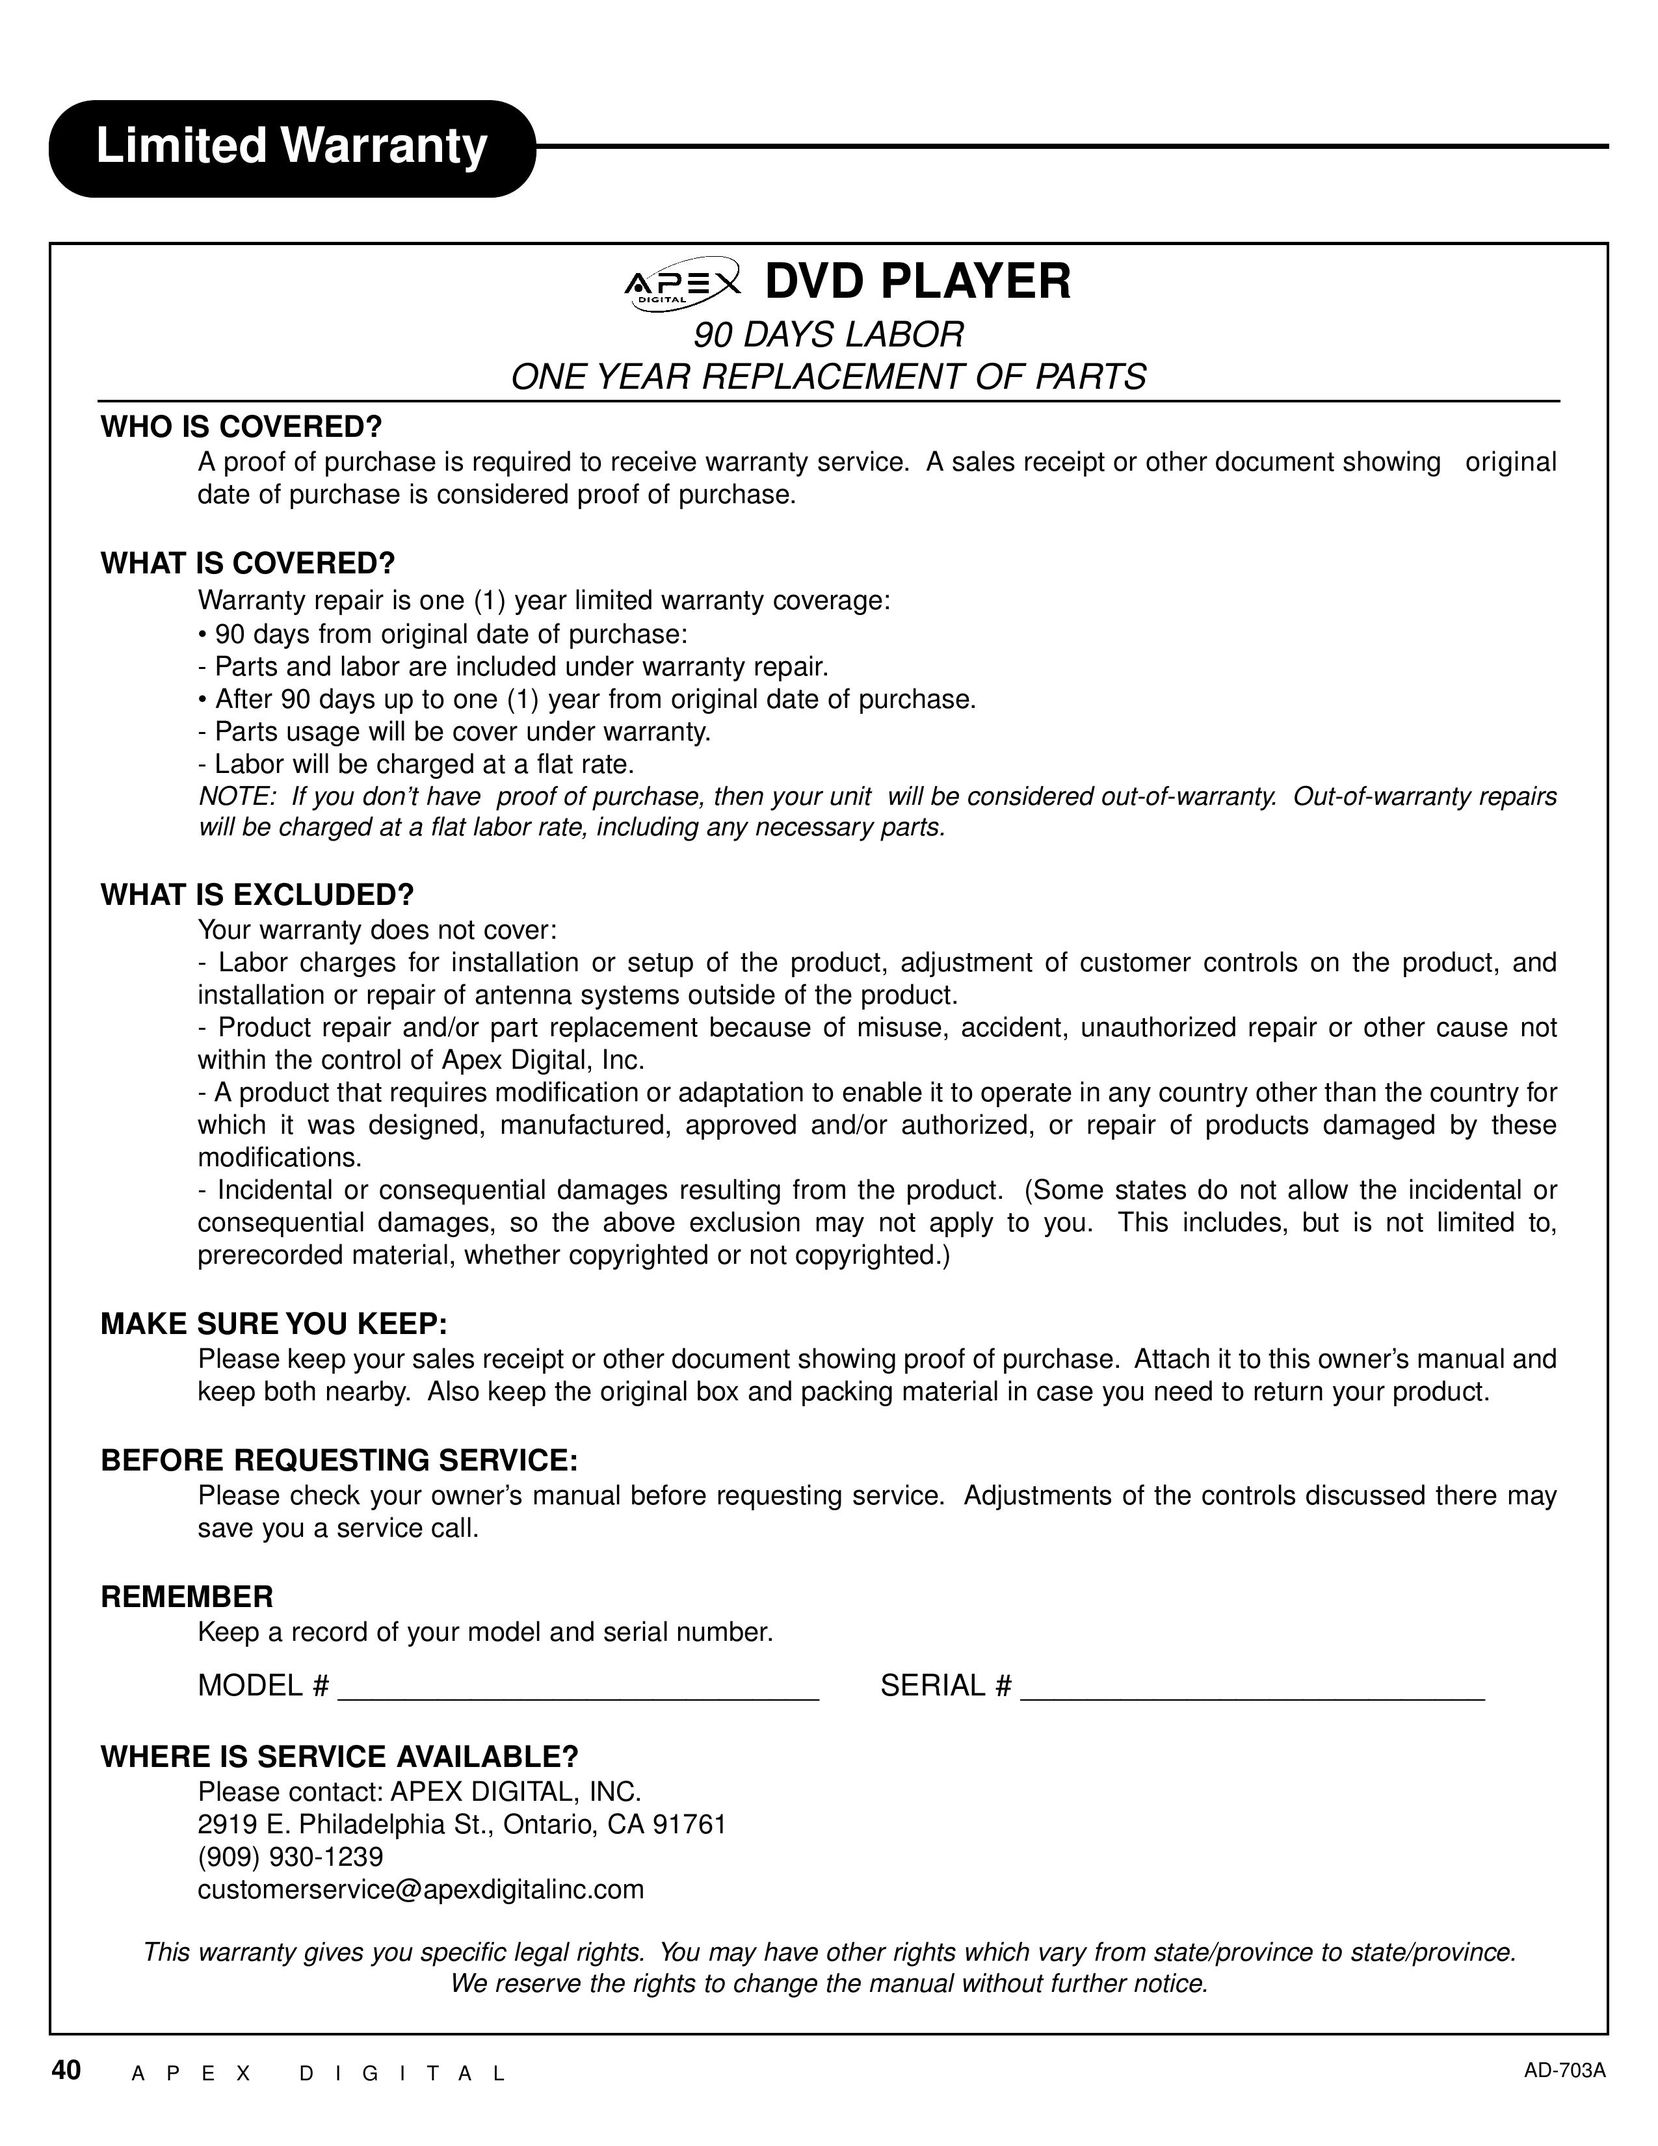 Apex Digital AD-703A DVD Player User Manual